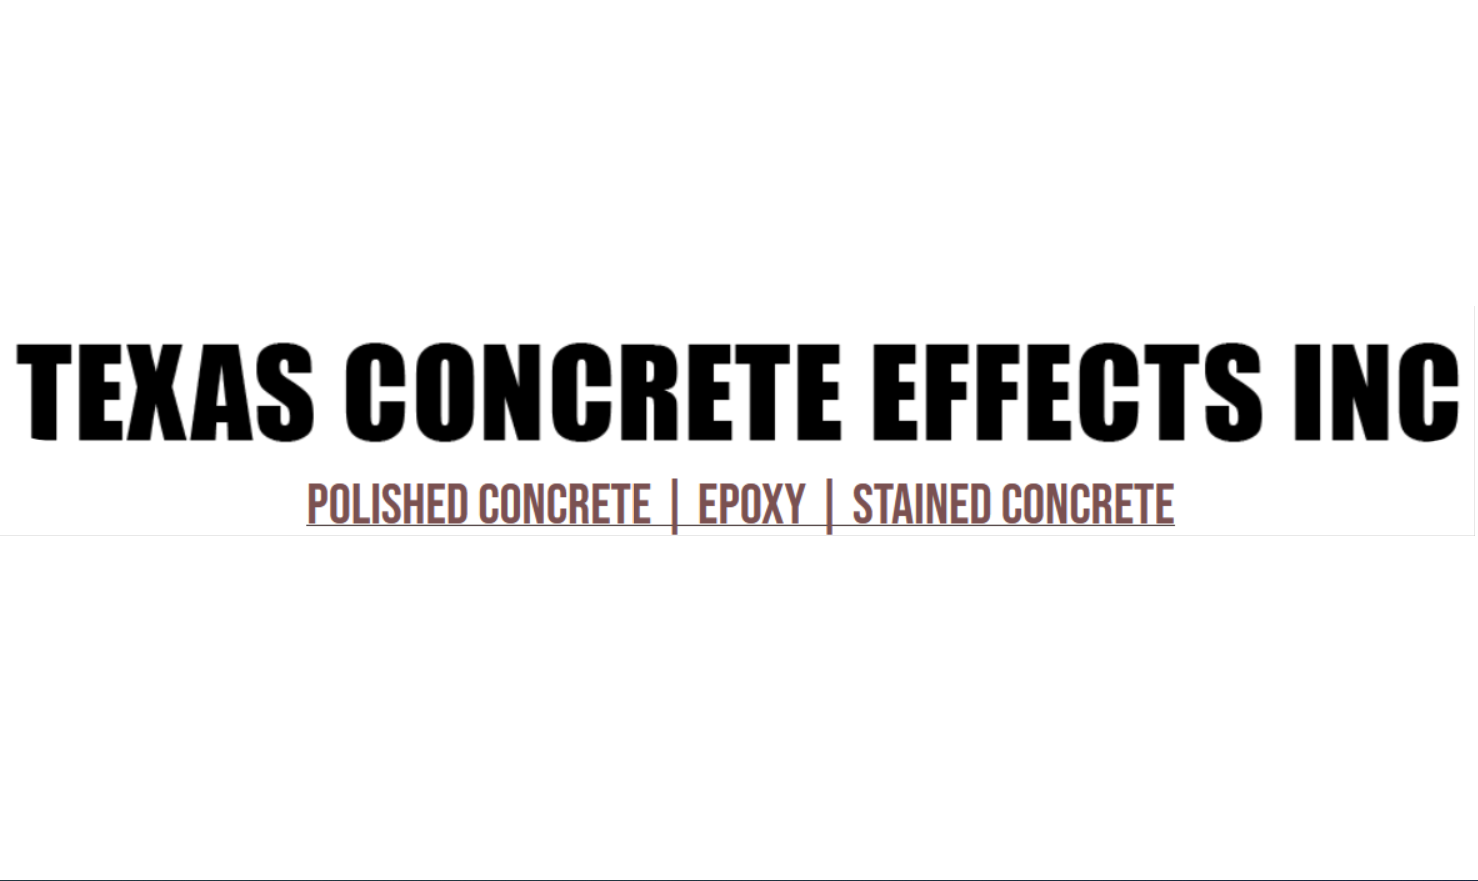 Texas Concrete Effects Inc